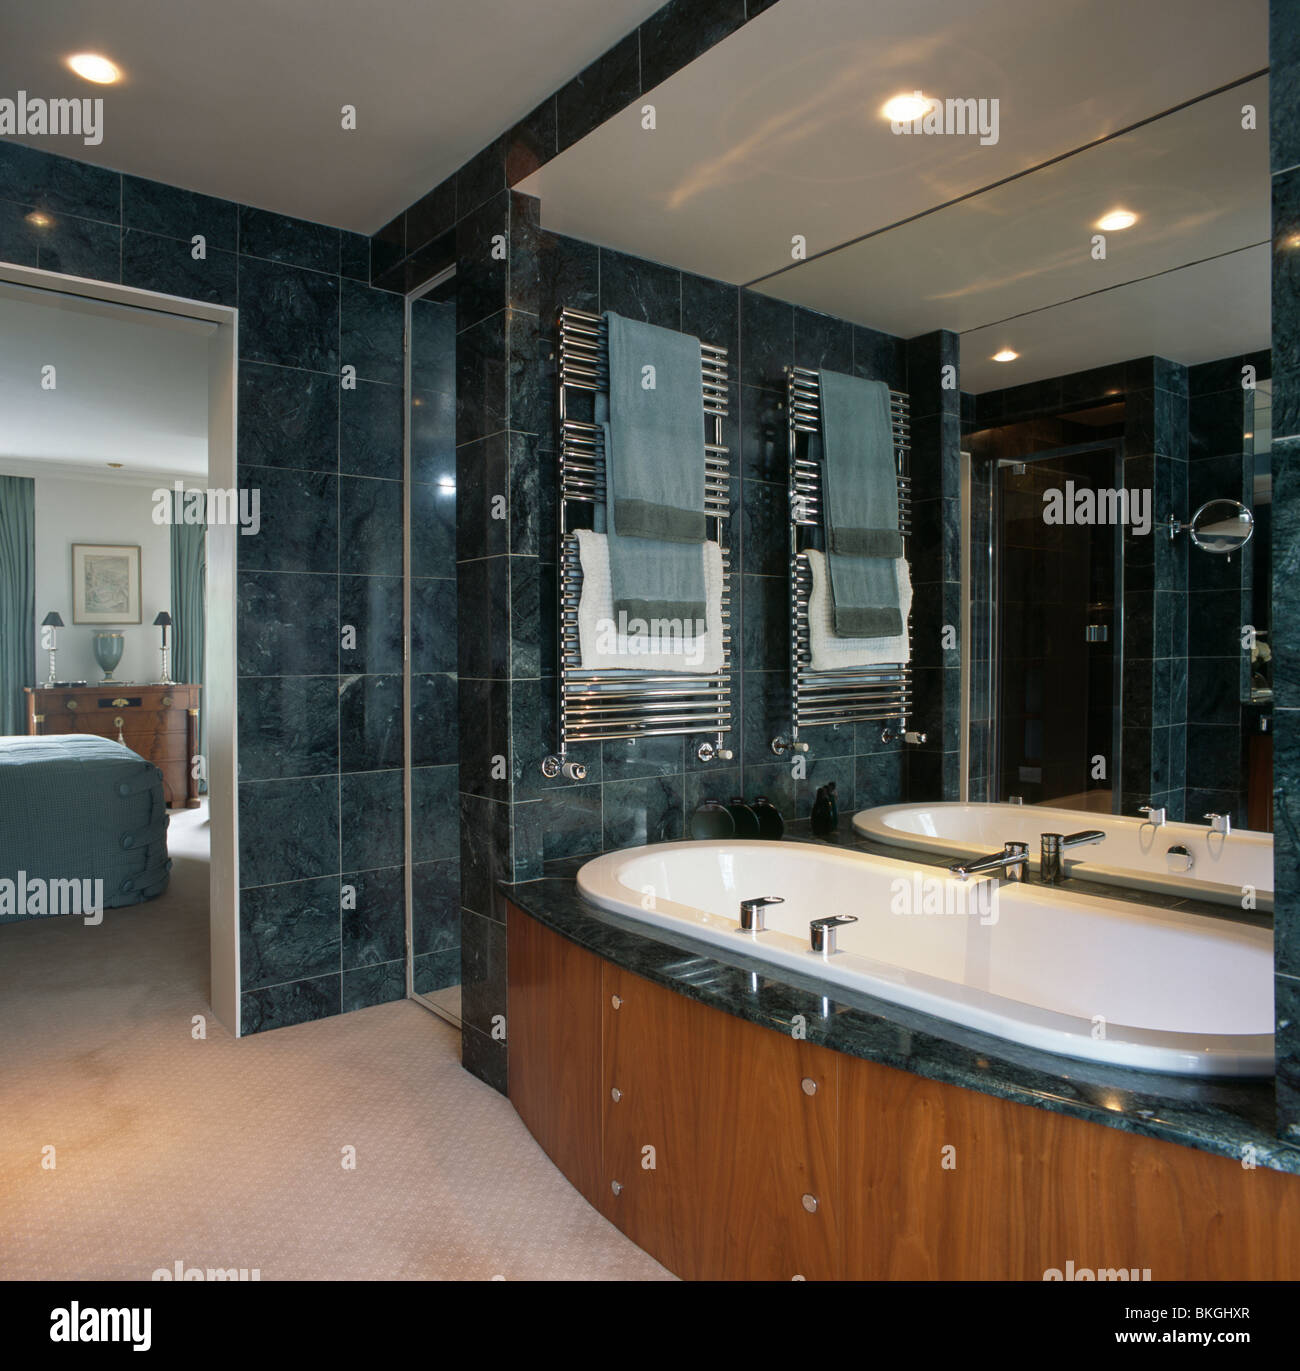 https://c8.alamy.com/comp/BKGHXR/towels-on-heated-towel-rails-above-bath-in-modern-marble-tiled-en-BKGHXR.jpg